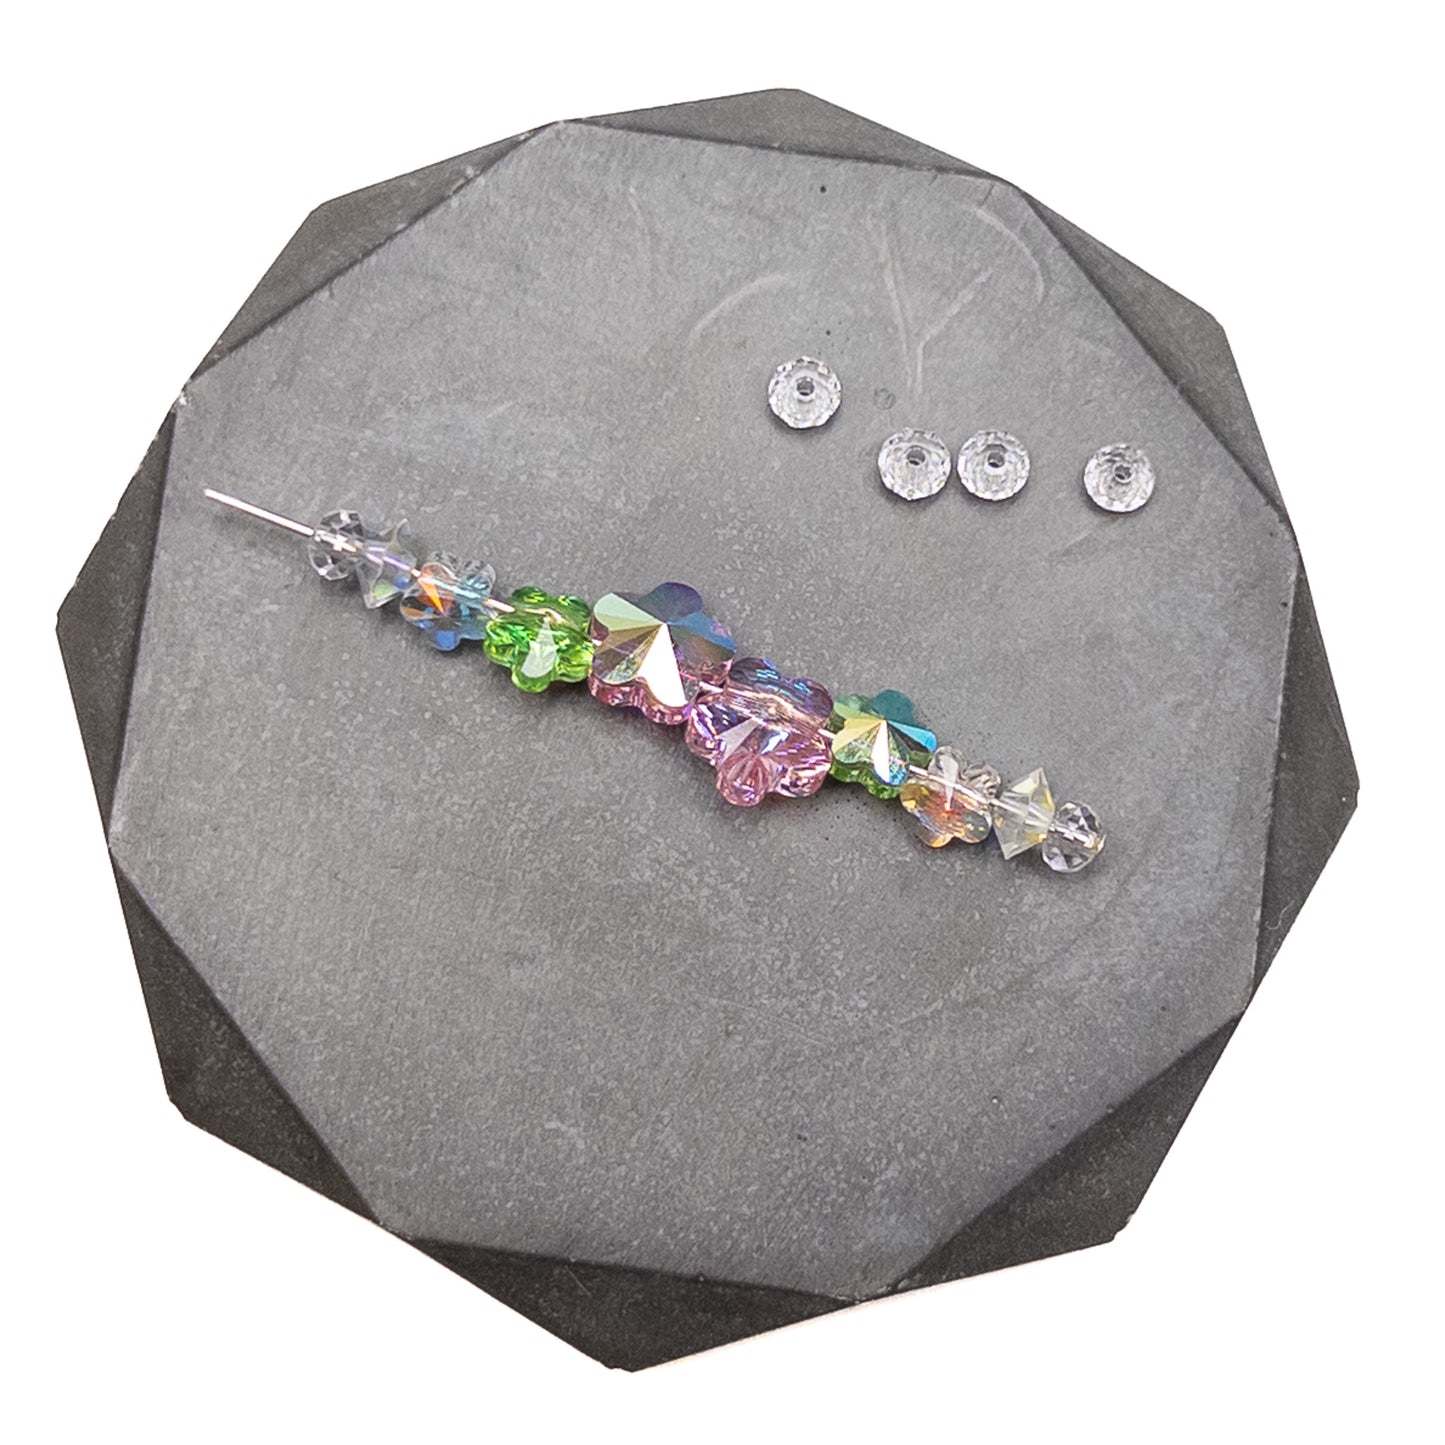 Swarovski Springtime Crystal Flower Mix - 14 pieces-The Bead Gallery Honolulu